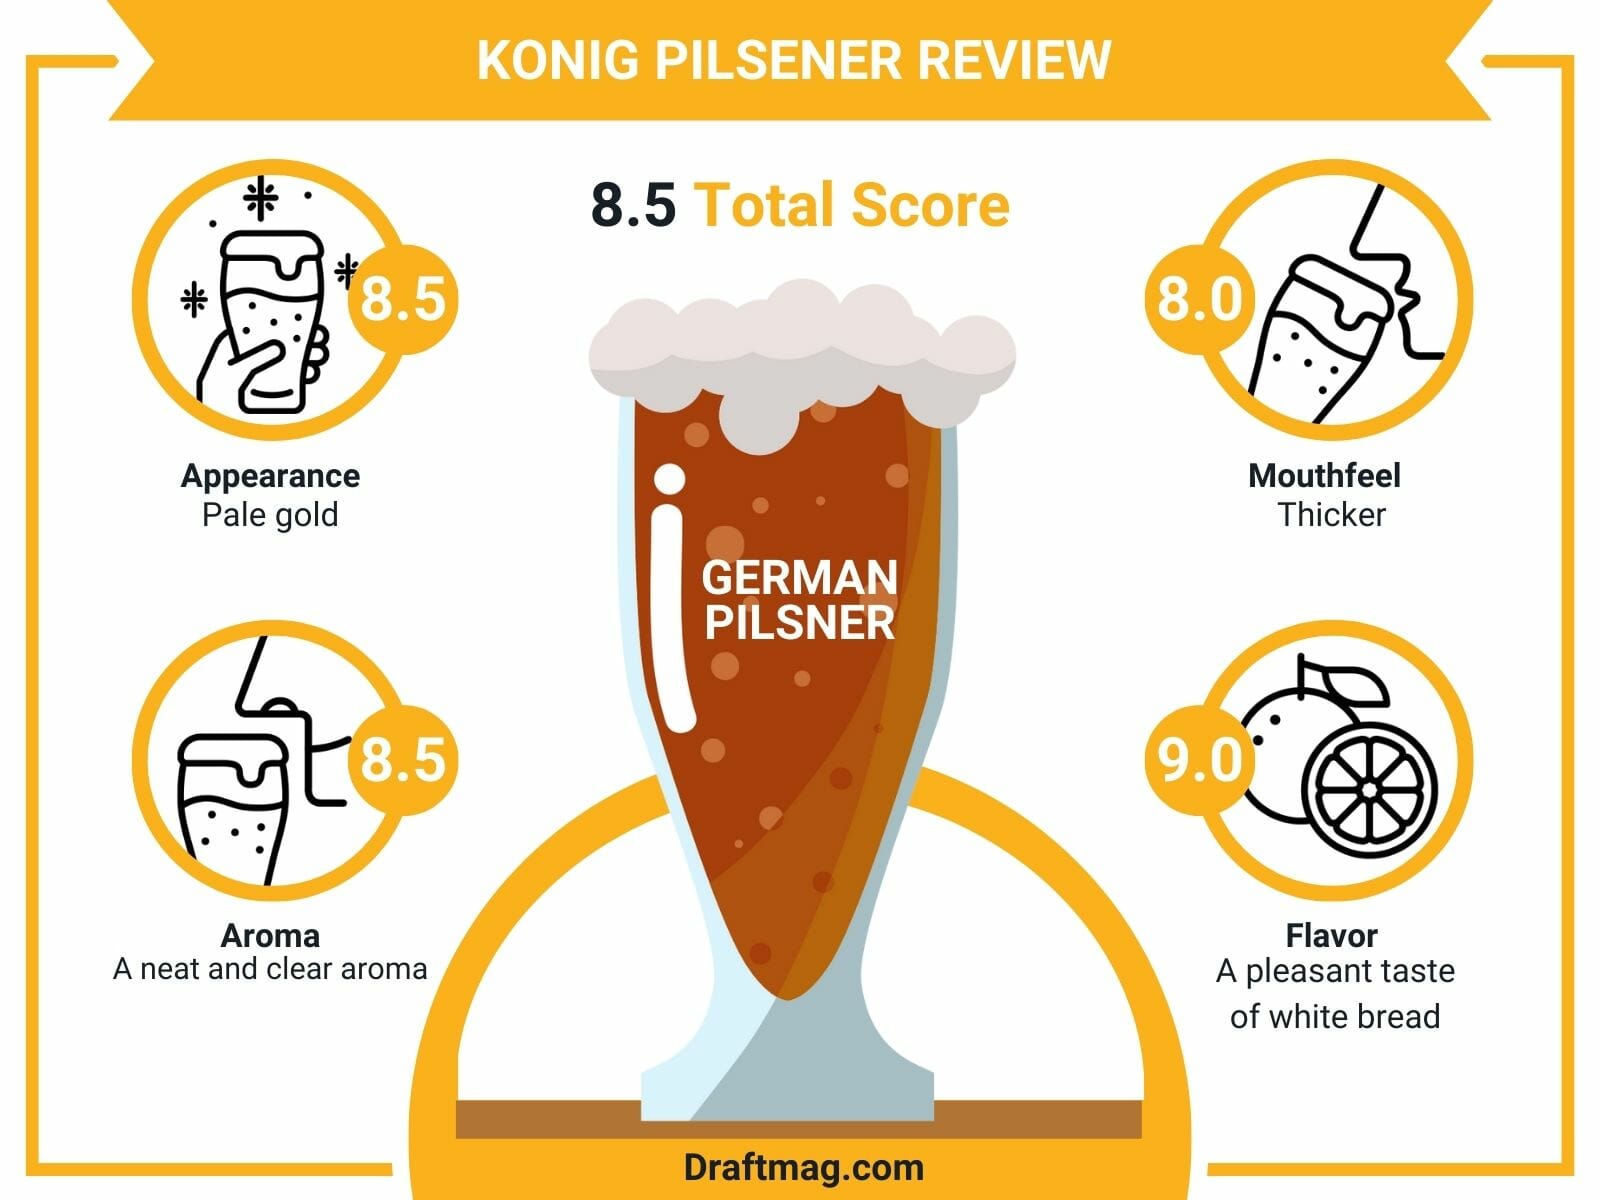 Konig Pilsener Review Infographic